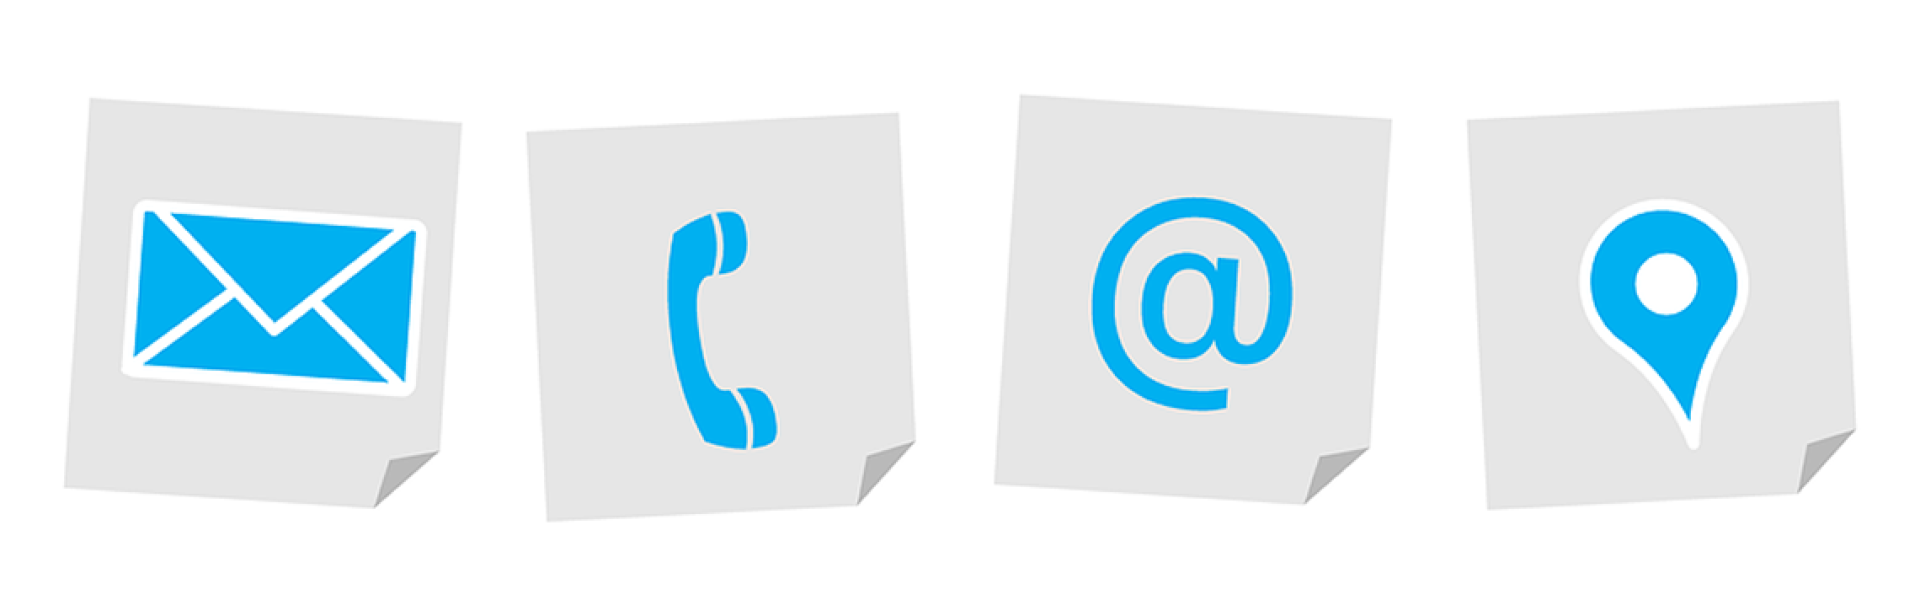 Simboli email, telefono e contatti vari